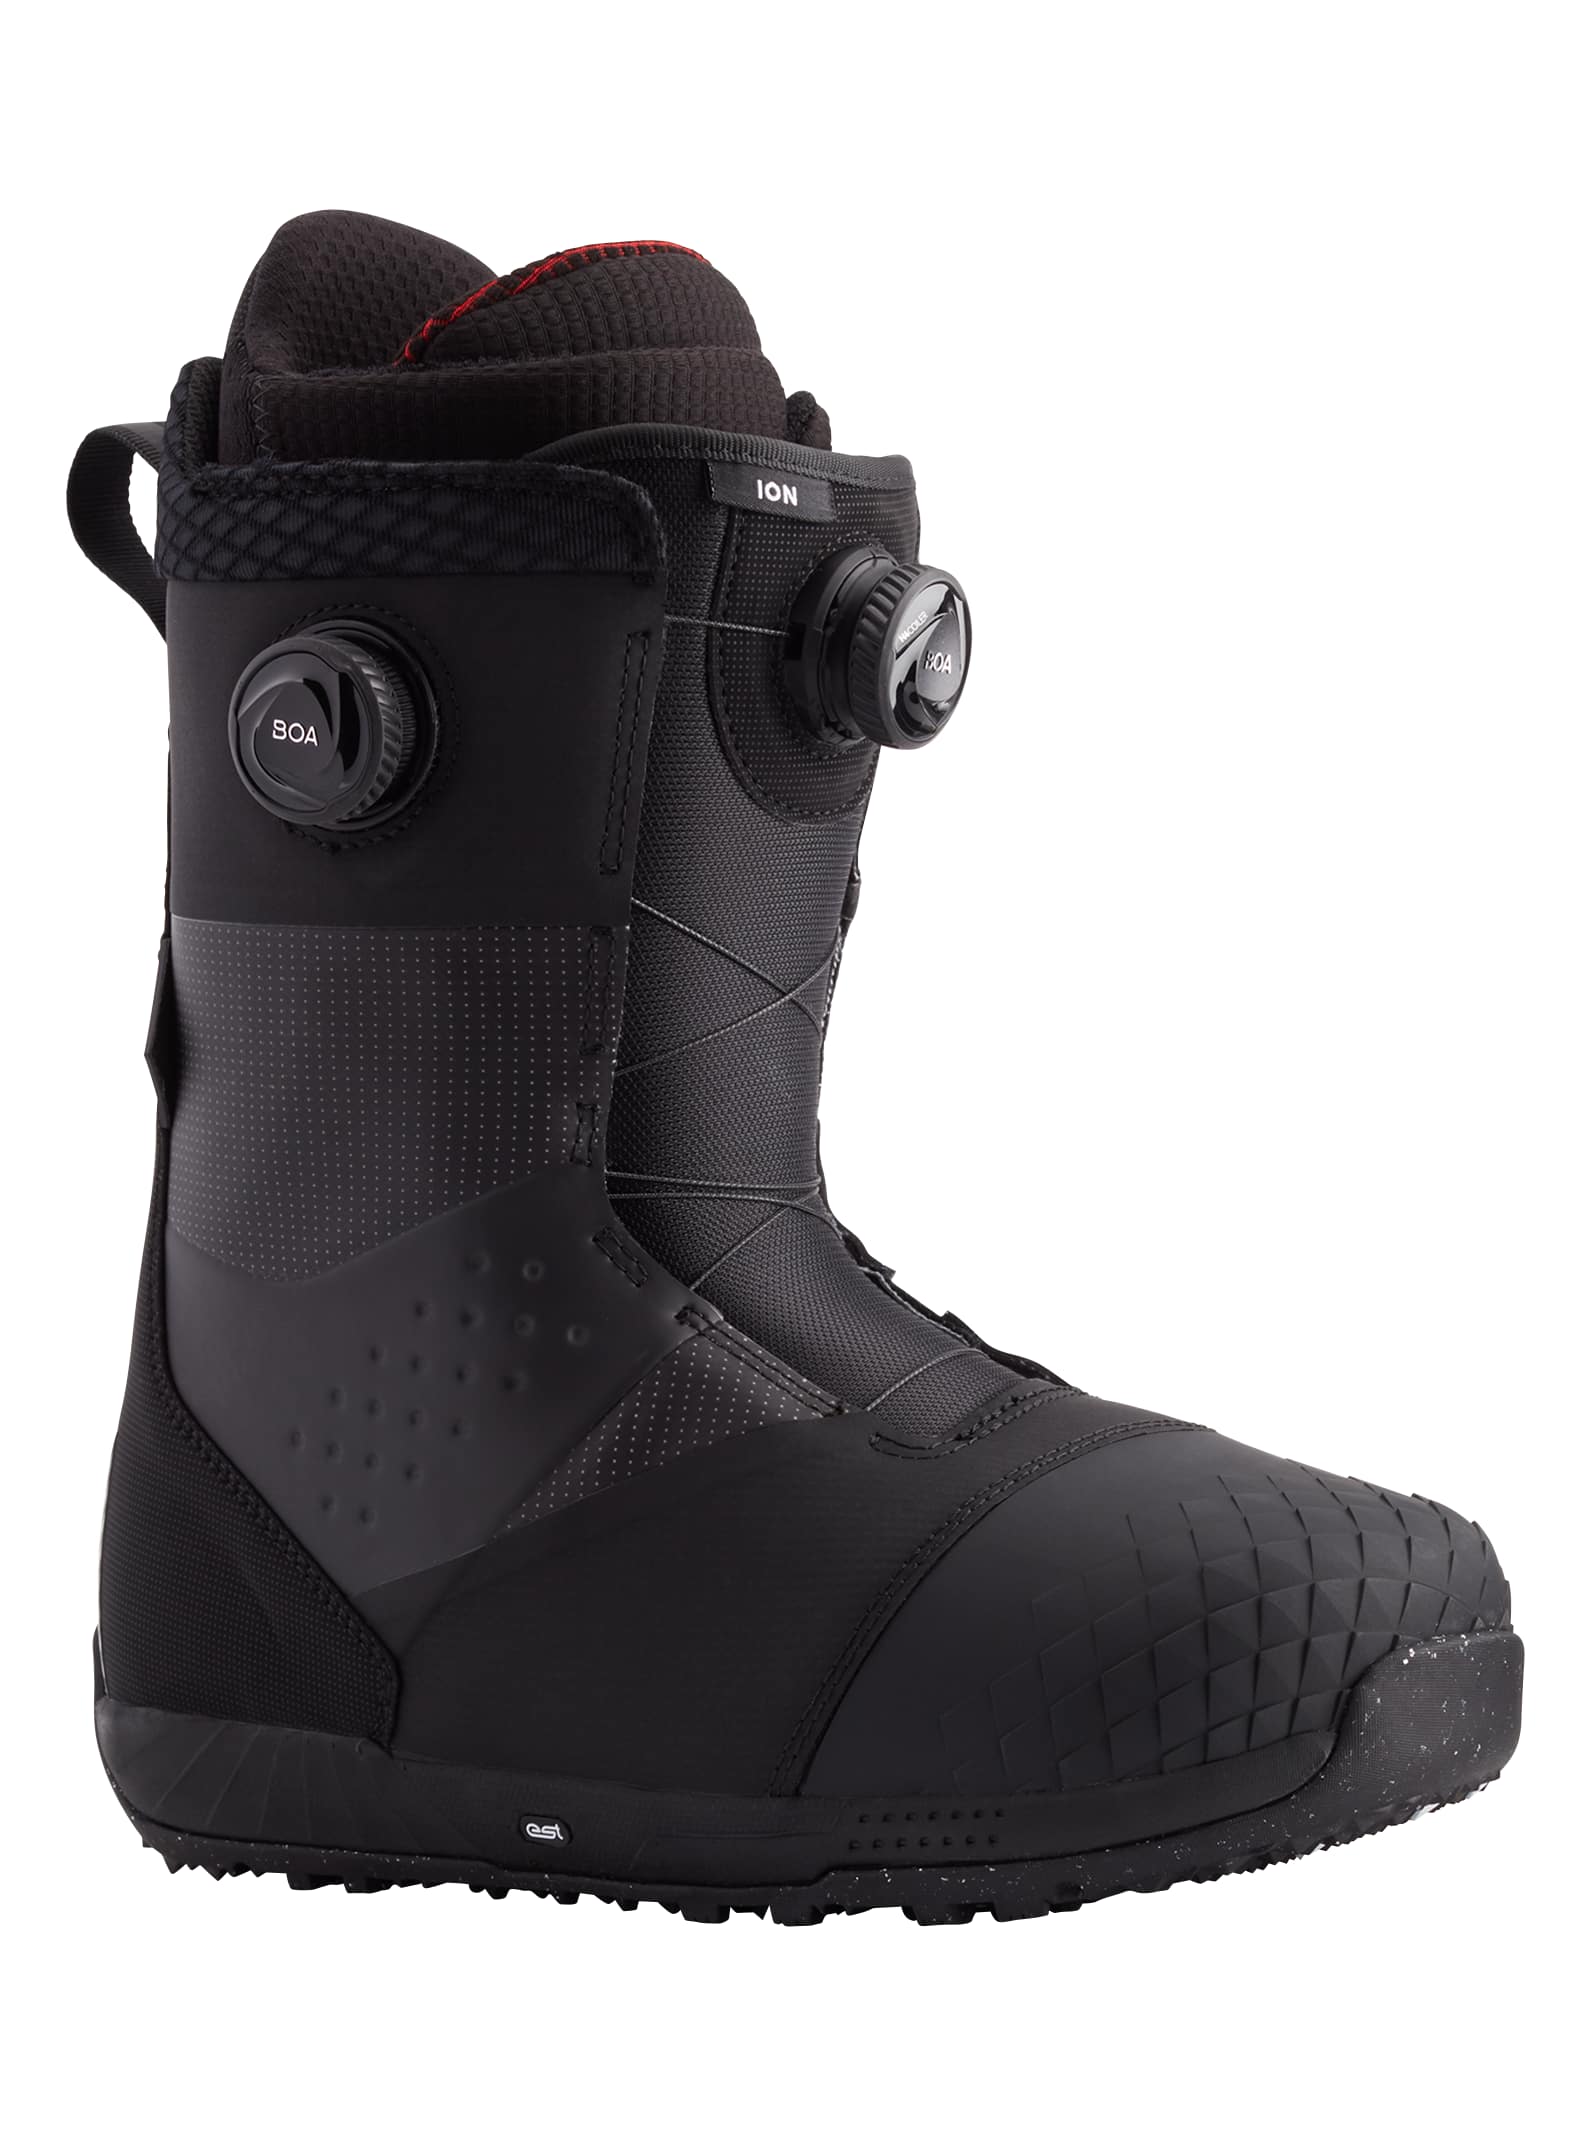 Men's Burton Ion BOA® Snowboard Boots